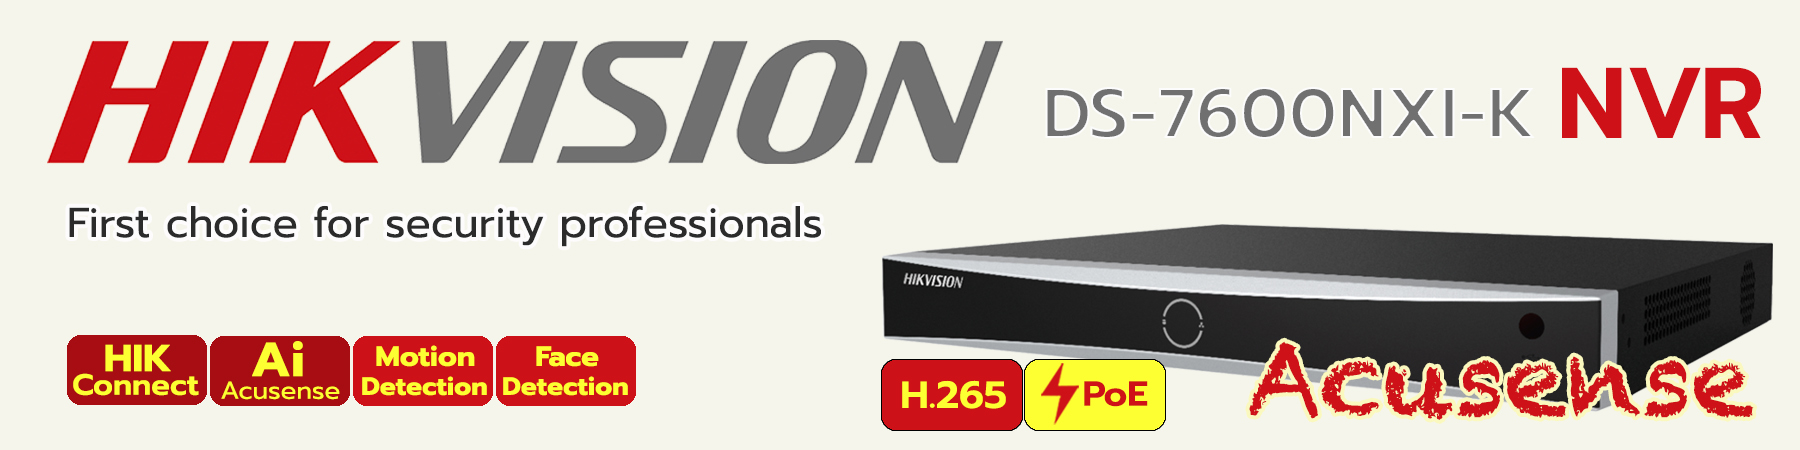 Hikvision Acusense NVR, Hikvision Acusense Network Video Recorder, DS-7604NXI-K1, DS-7604NXI-K1/4P, DS-7608NXI-K2, DS-7608NXI-K2/8P, DS-7616NXI-K2, DS-7616NXI-K2/16P, DS-7632NXI-K2